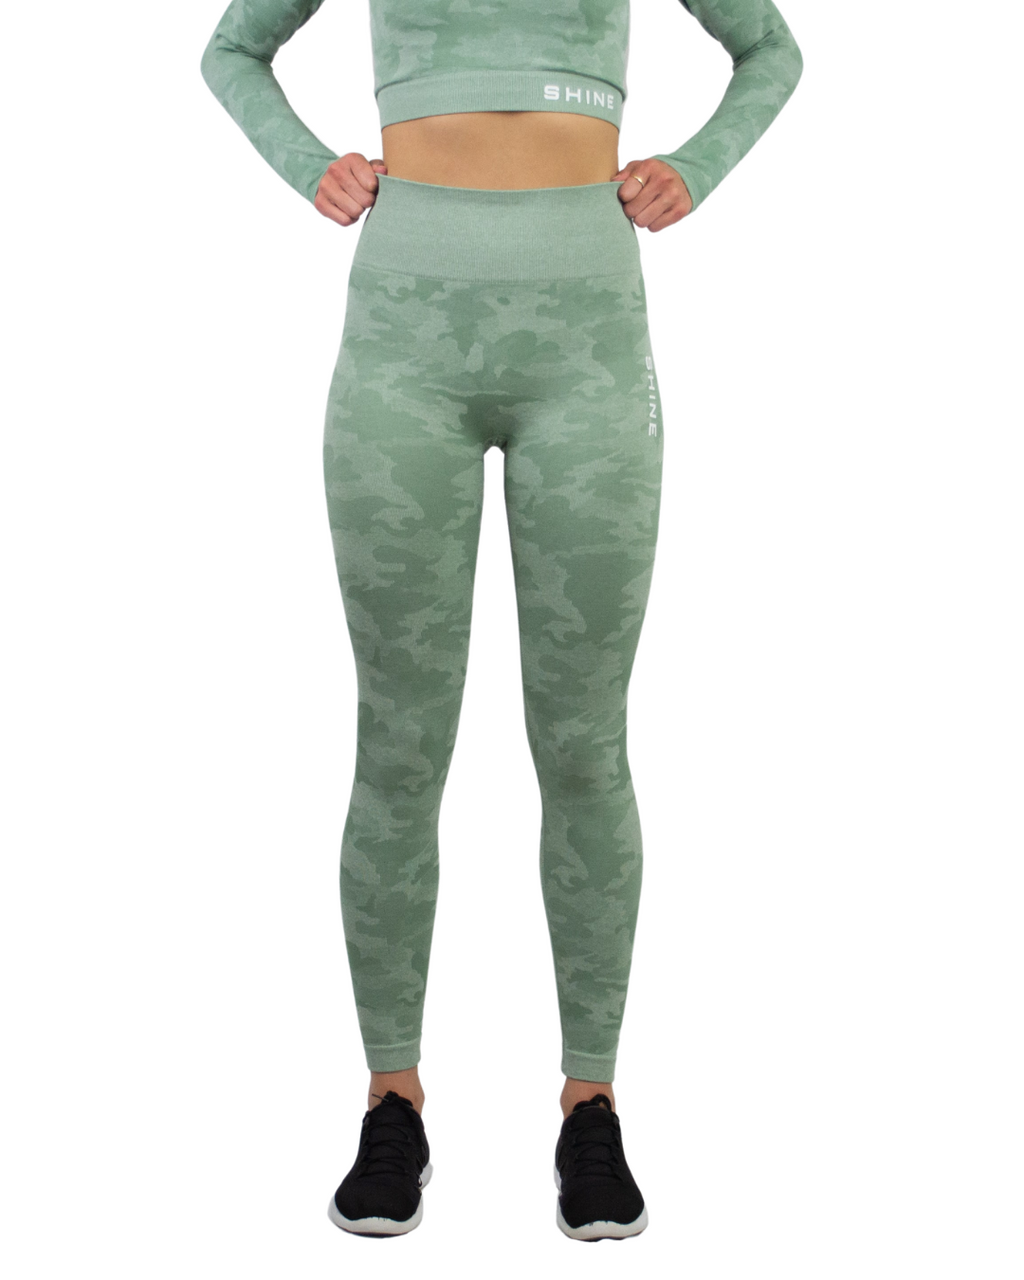 Top and Women's Sportswear Leggings in mint green microfiber with